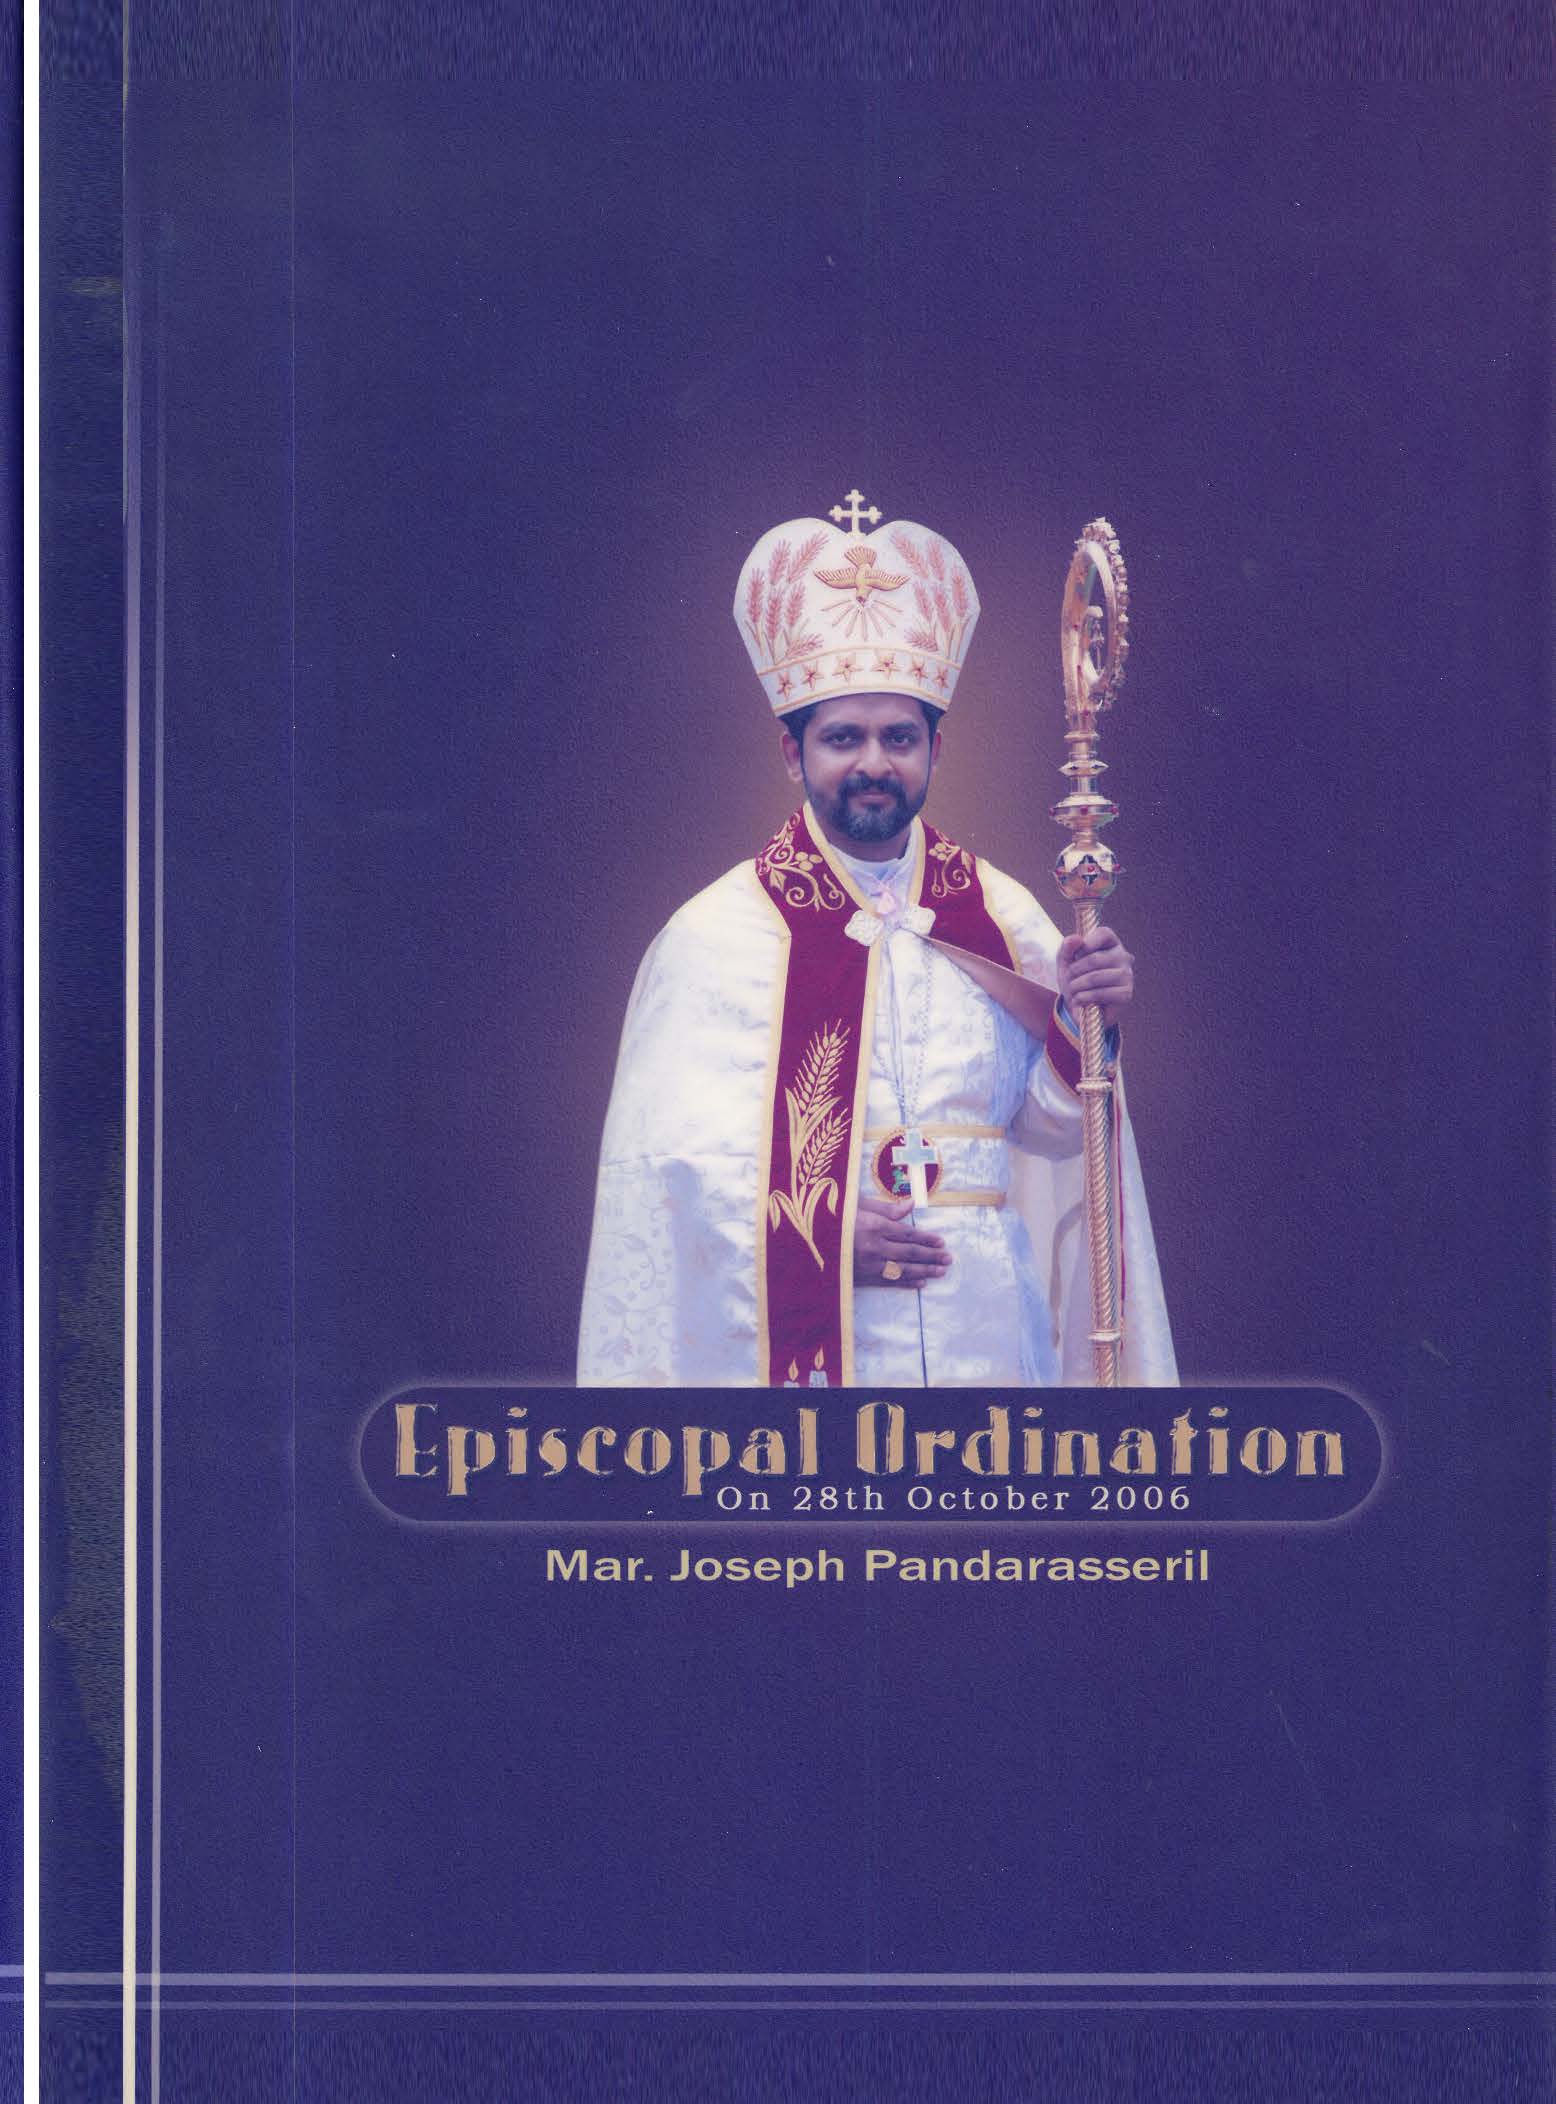 Photo Album of the Episcopal Ordination